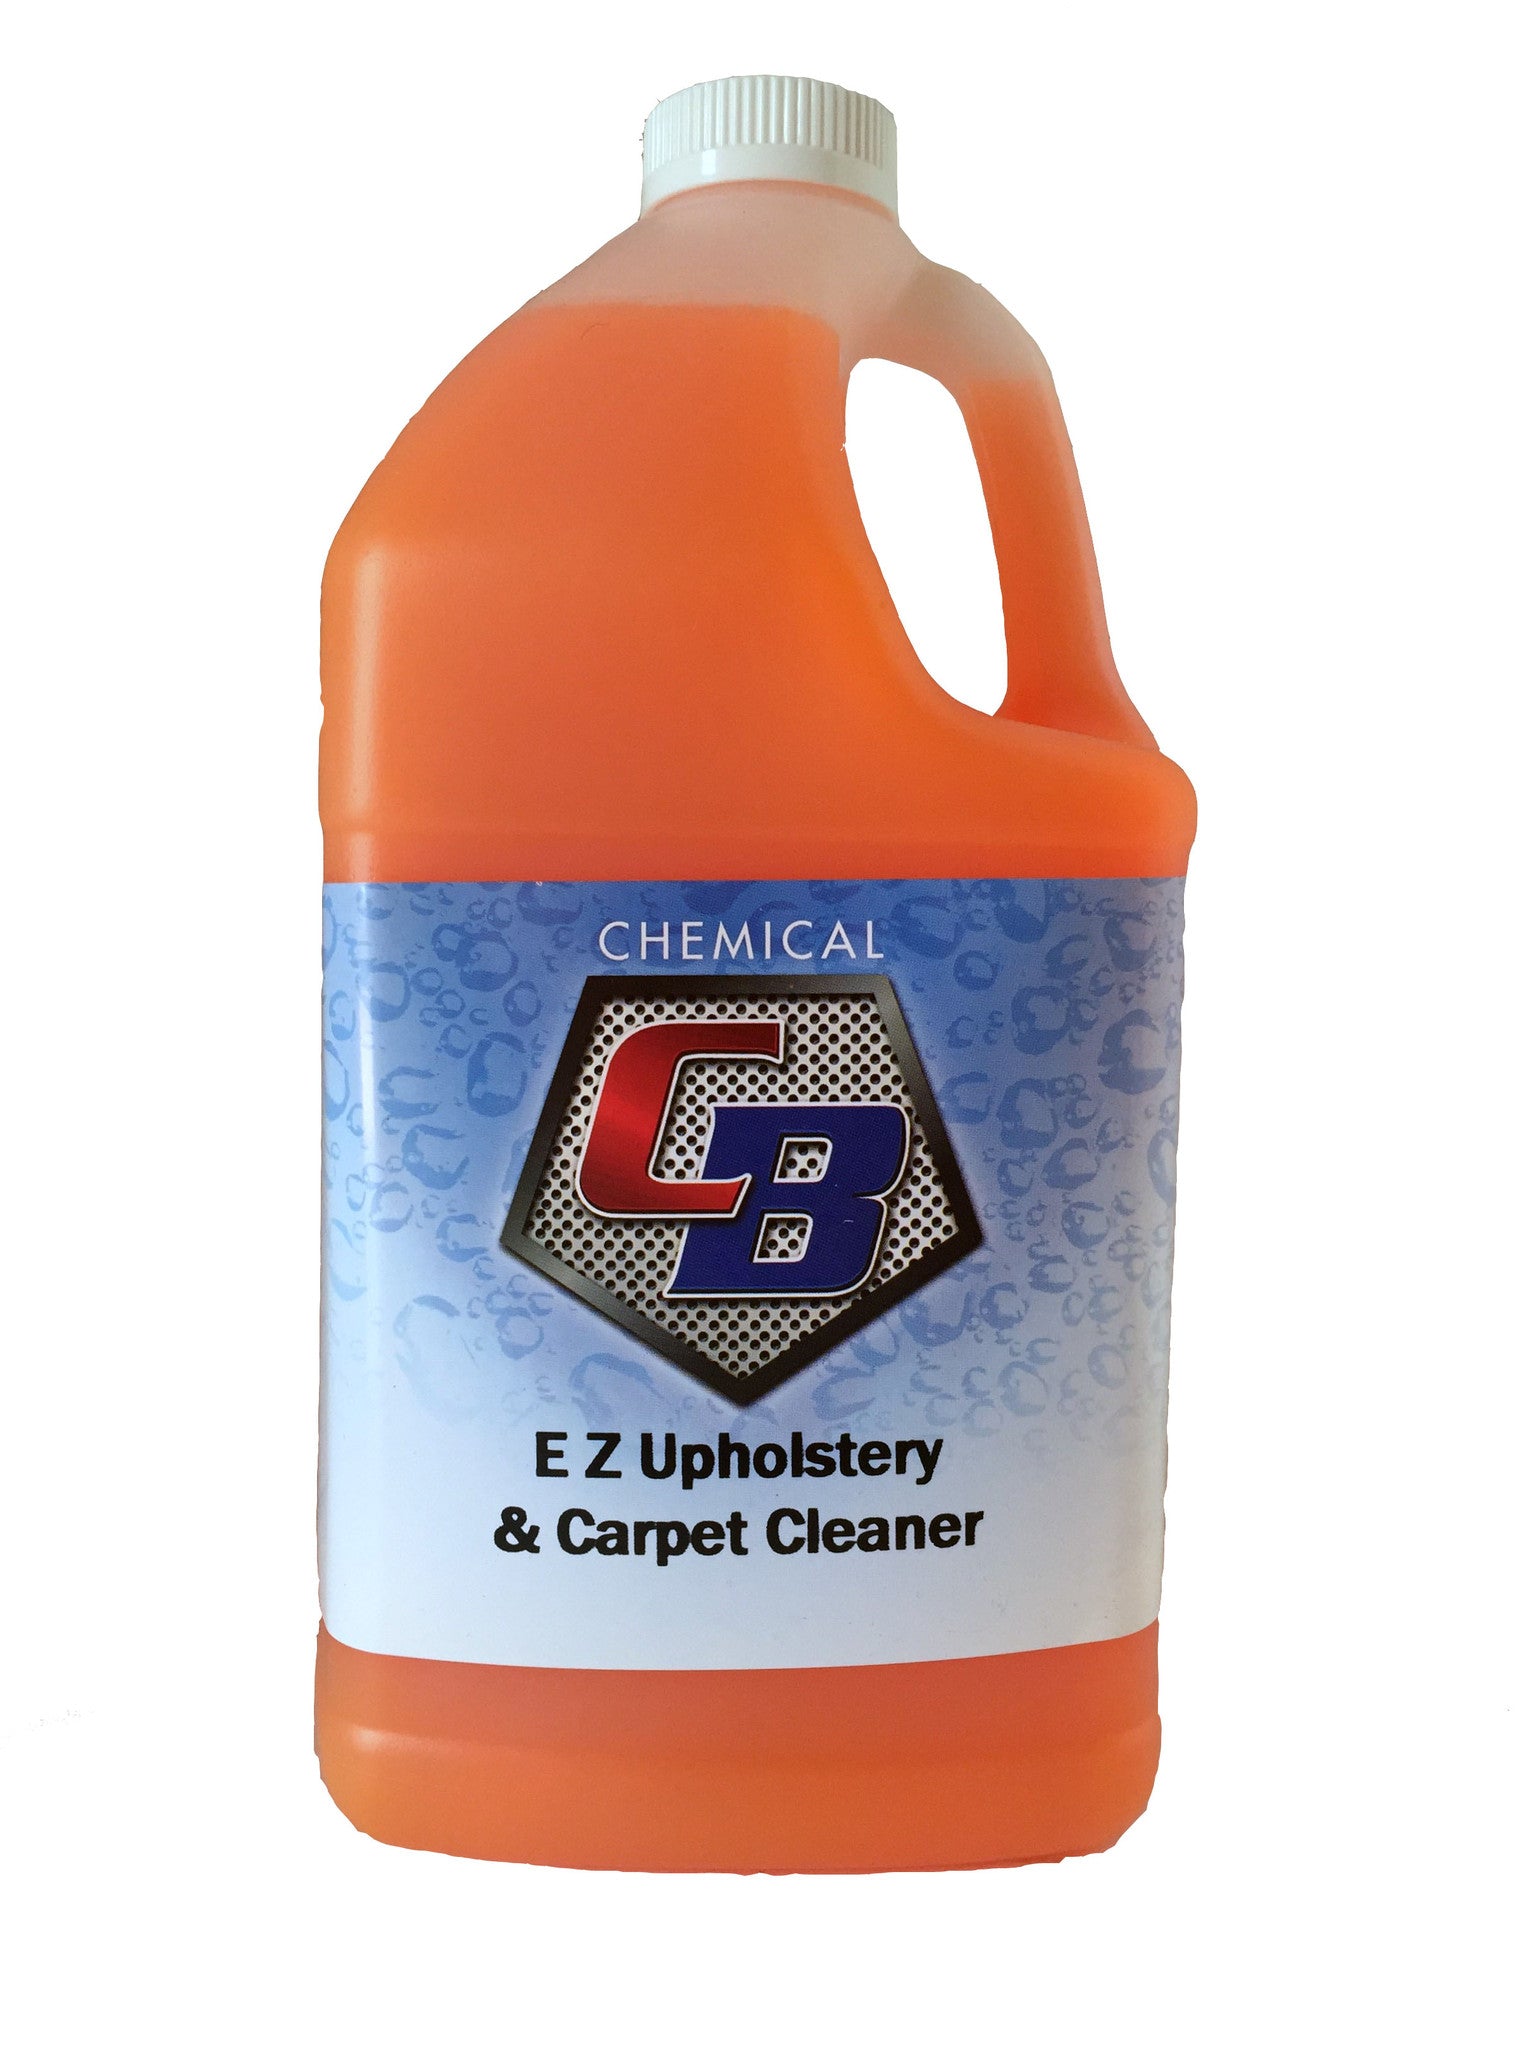 EZ Upholstery & Carpet Cleaner - C & B Chemical, Inc